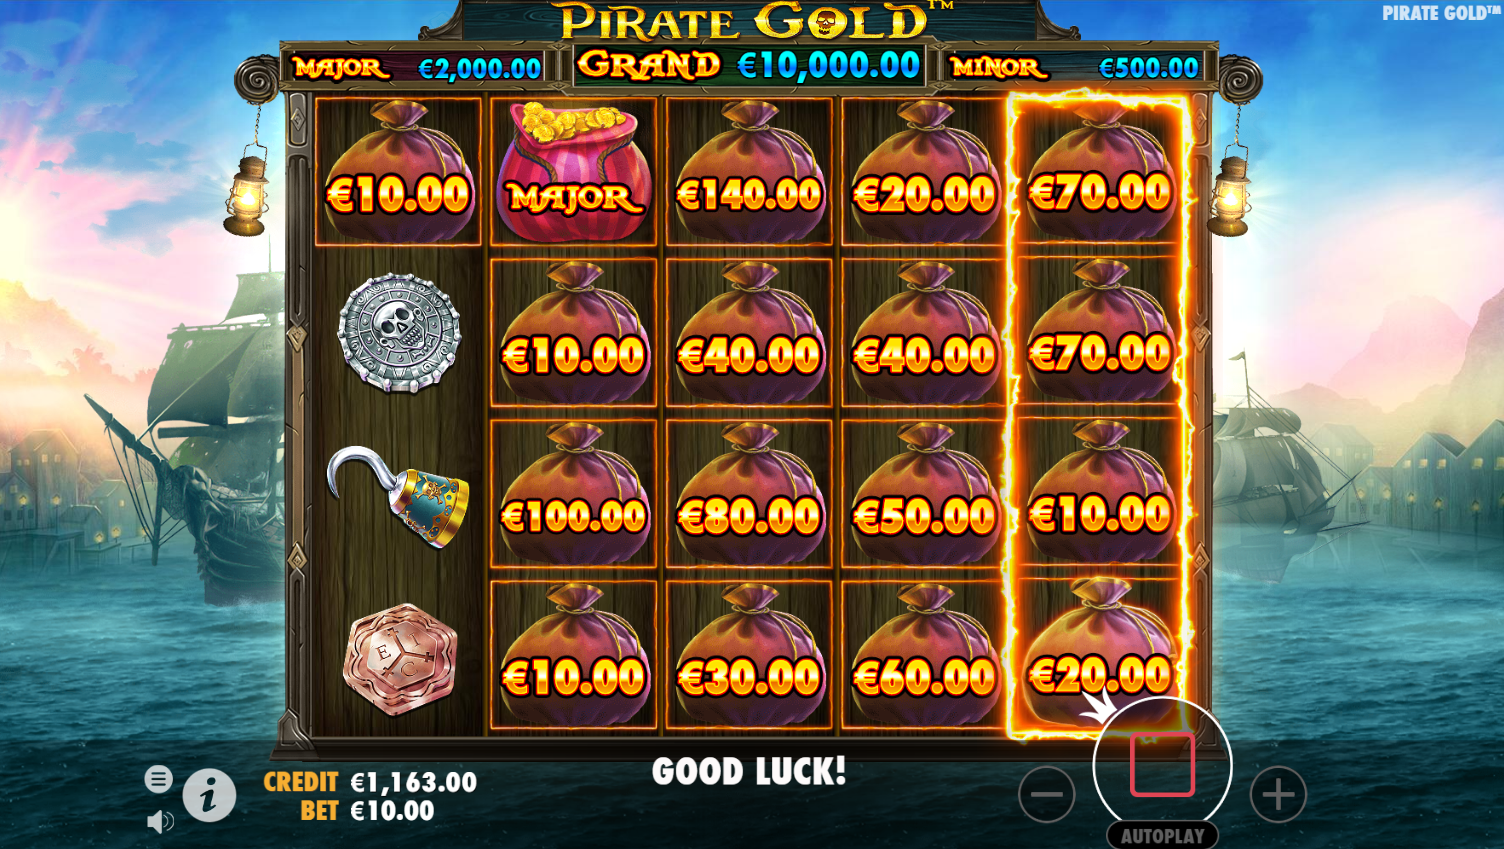 Pirates Gold money bags